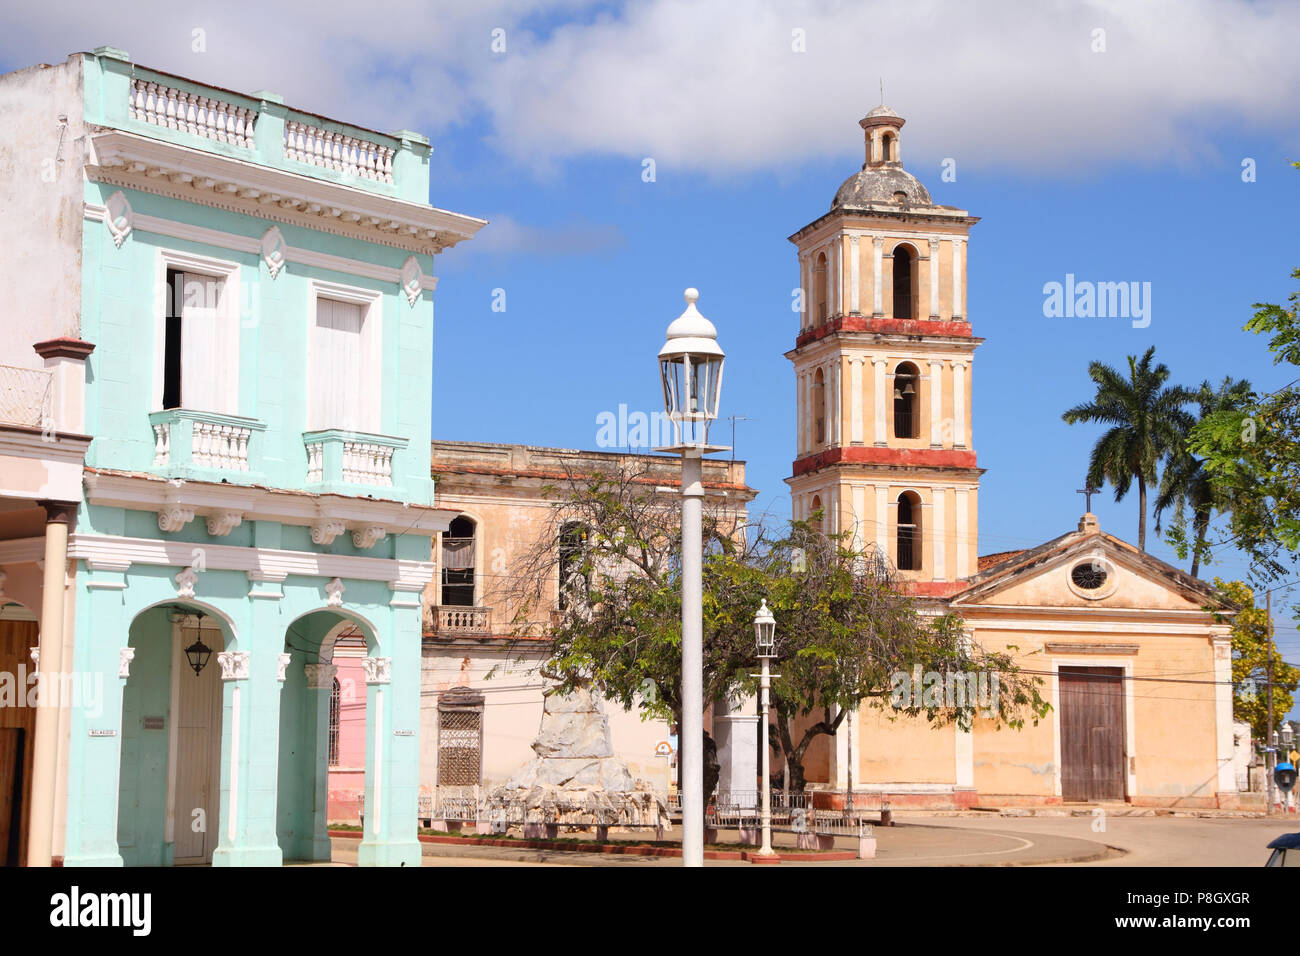 Remedios, Cuba - main square palm trees and church Stock Photo